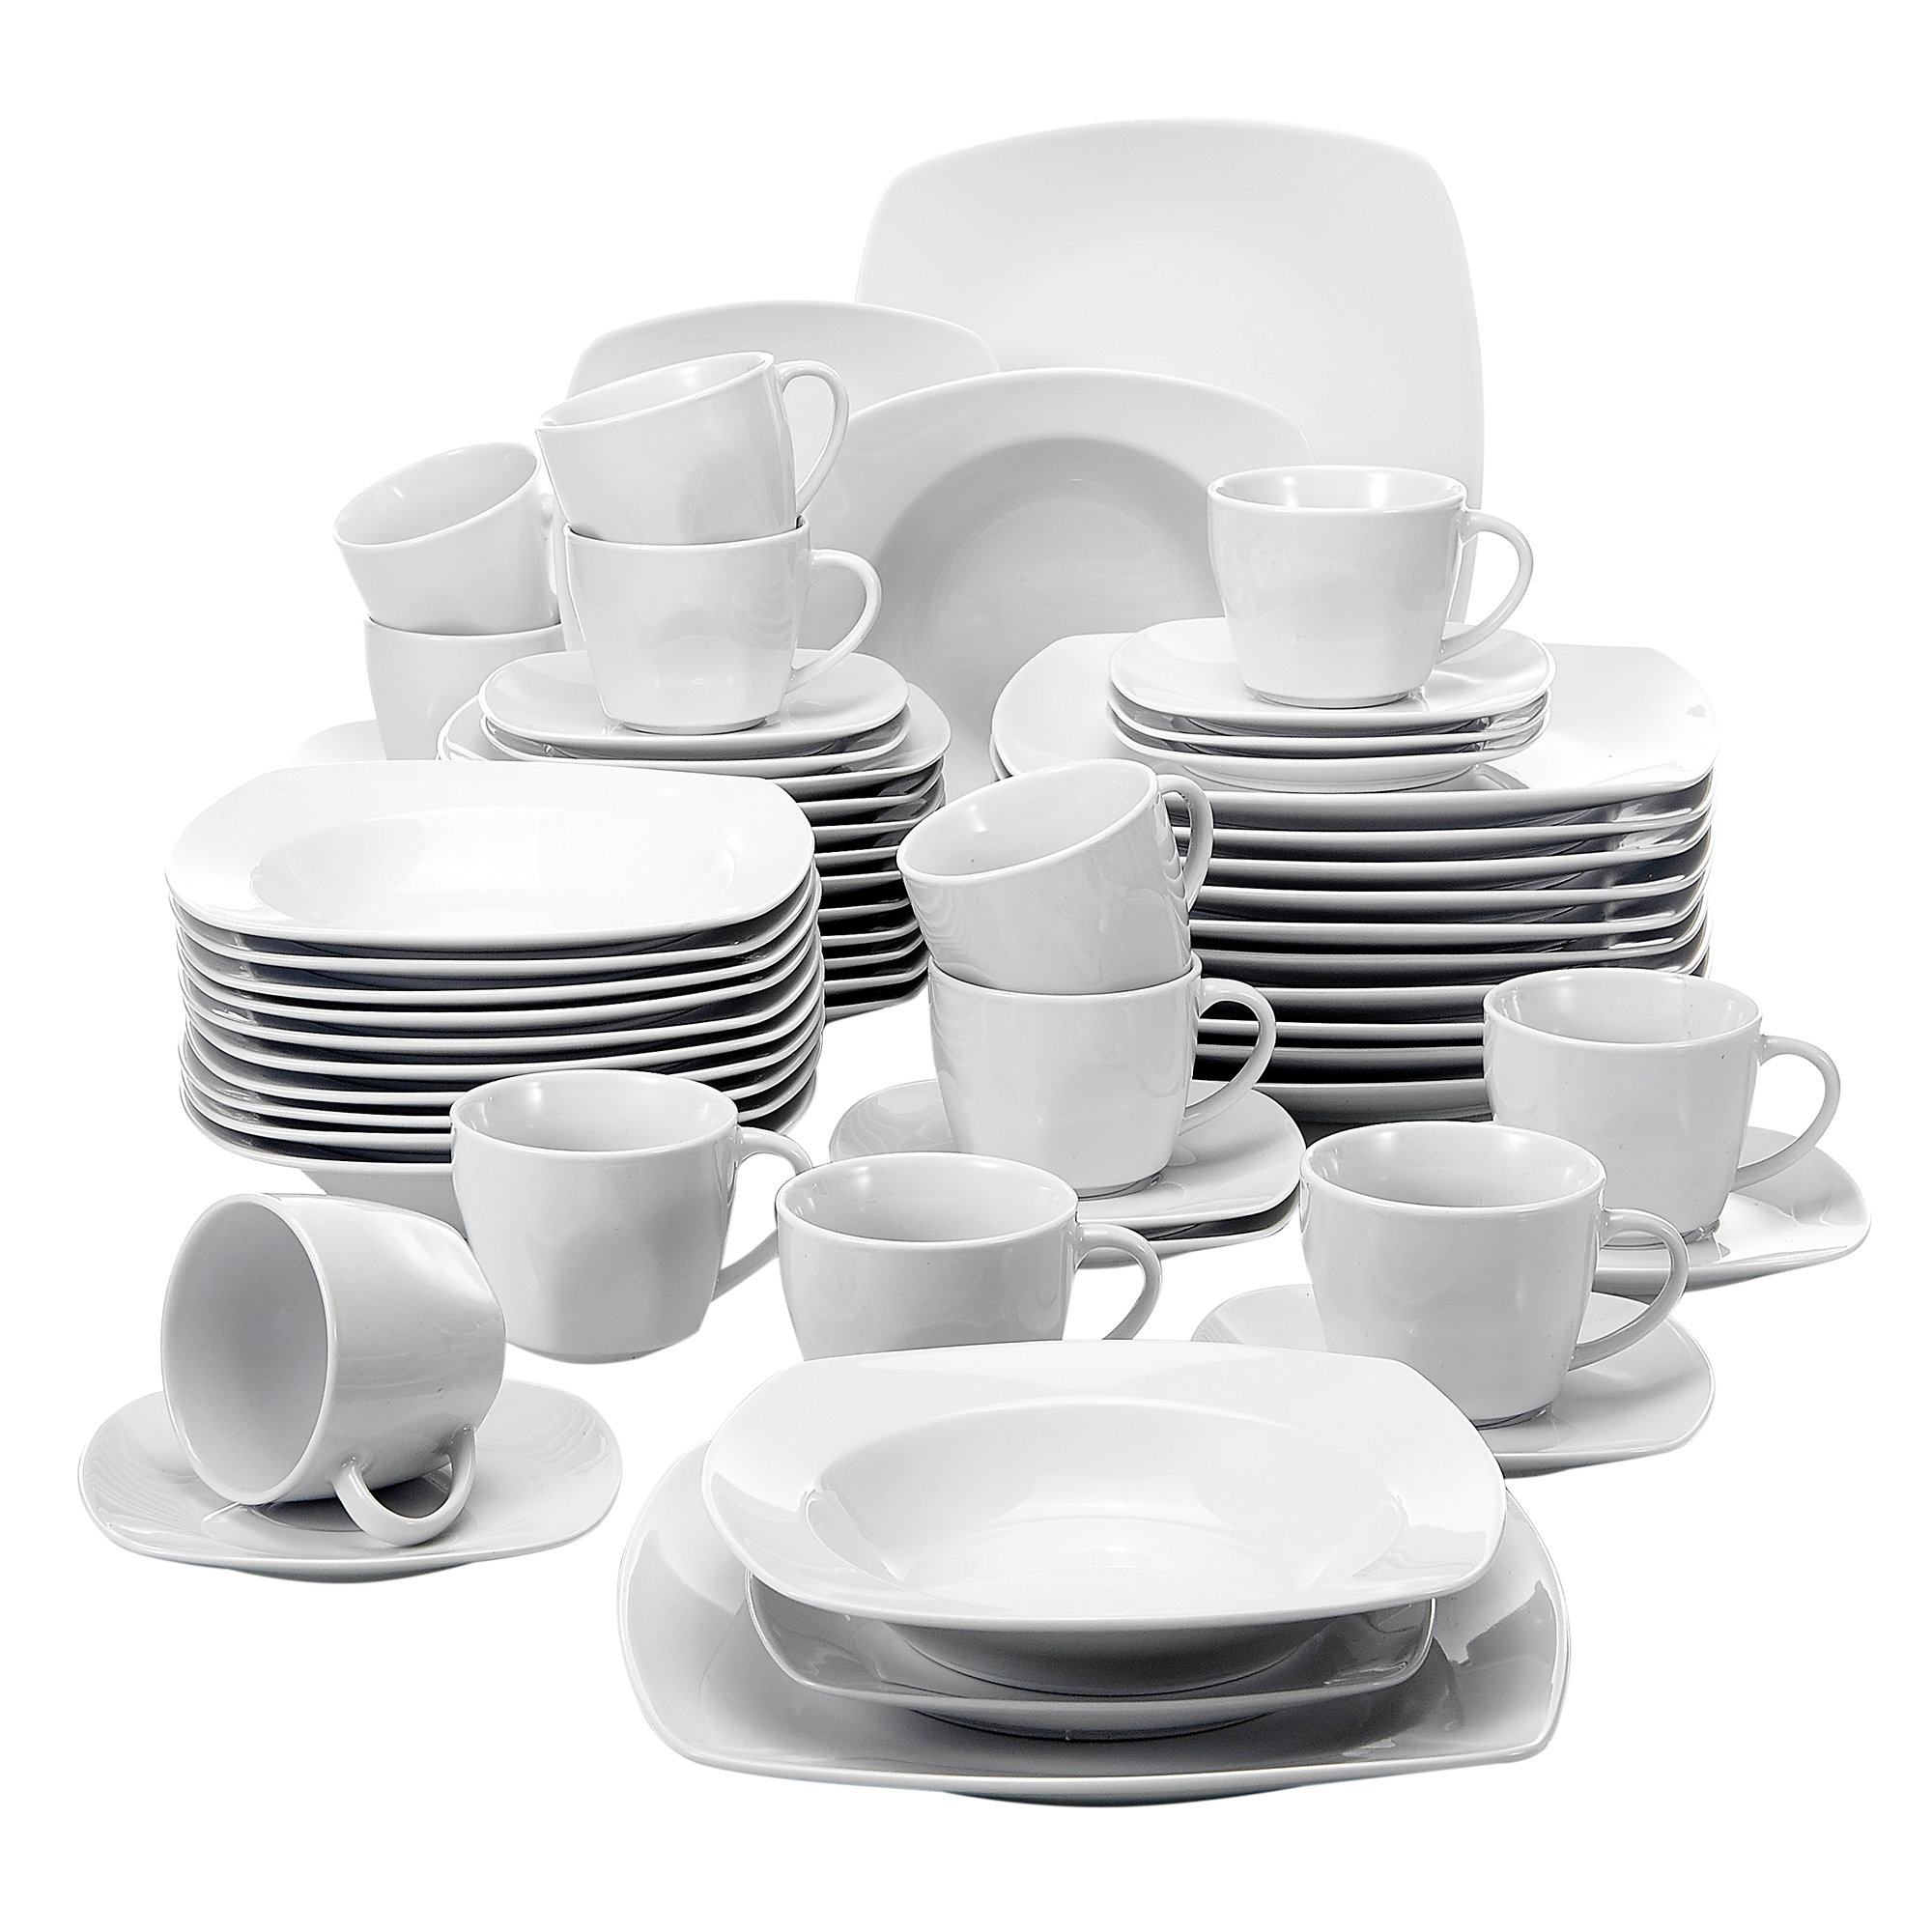 Malacasa Elisa 60-piece Porcelain Dinner Set With Coffee Cups